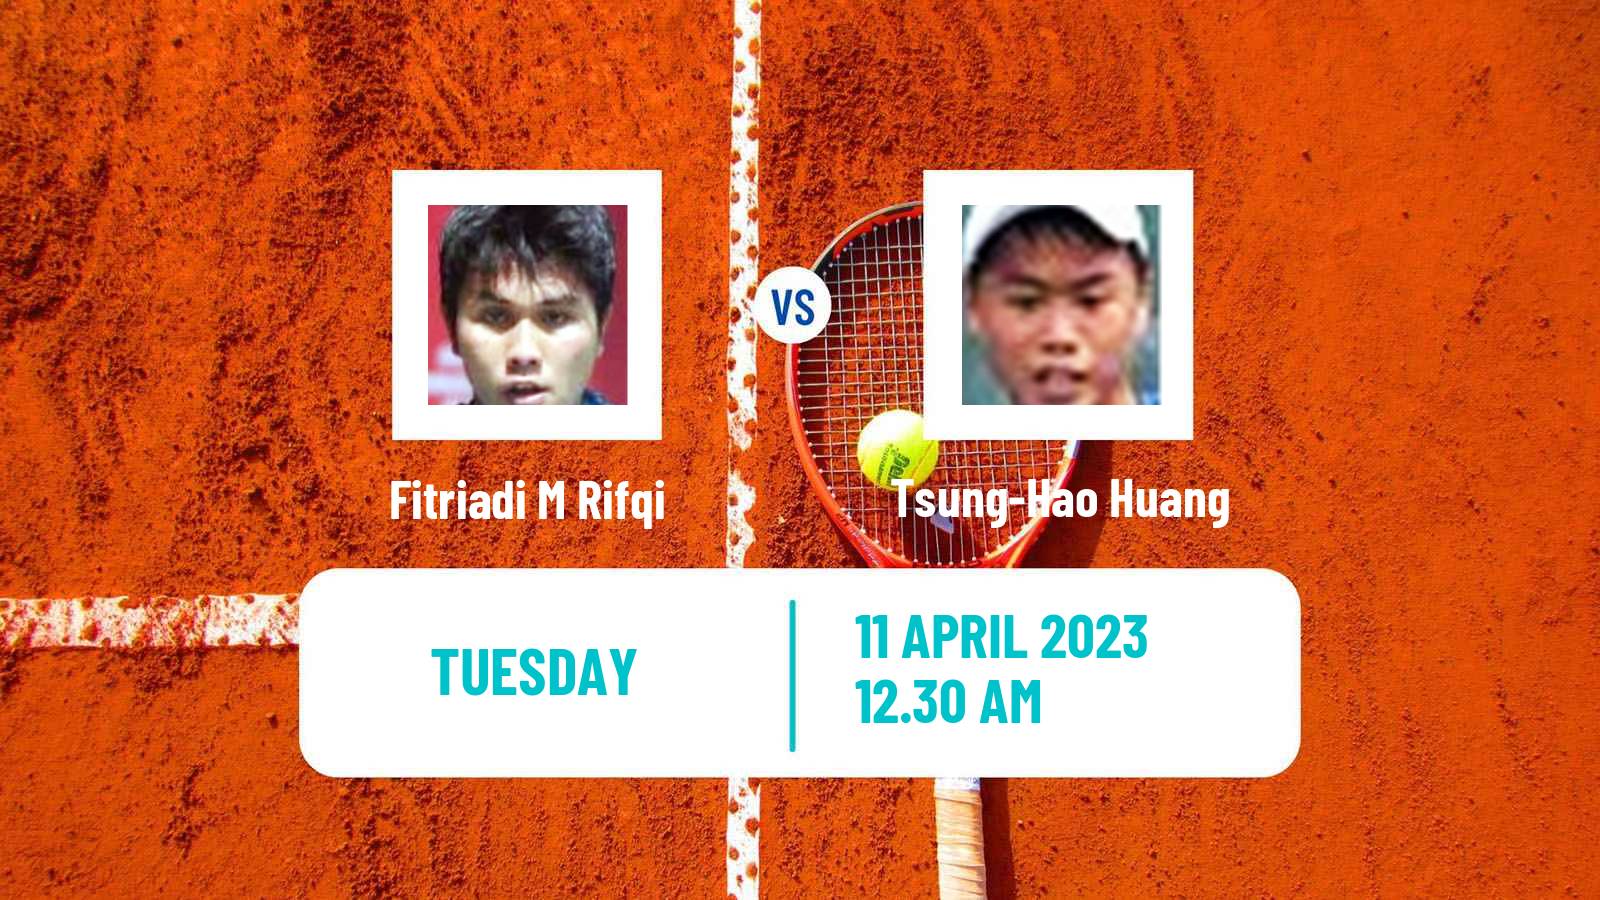 Tennis ITF Tournaments M Rifqi Fitriadi - Tsung-Hao Huang